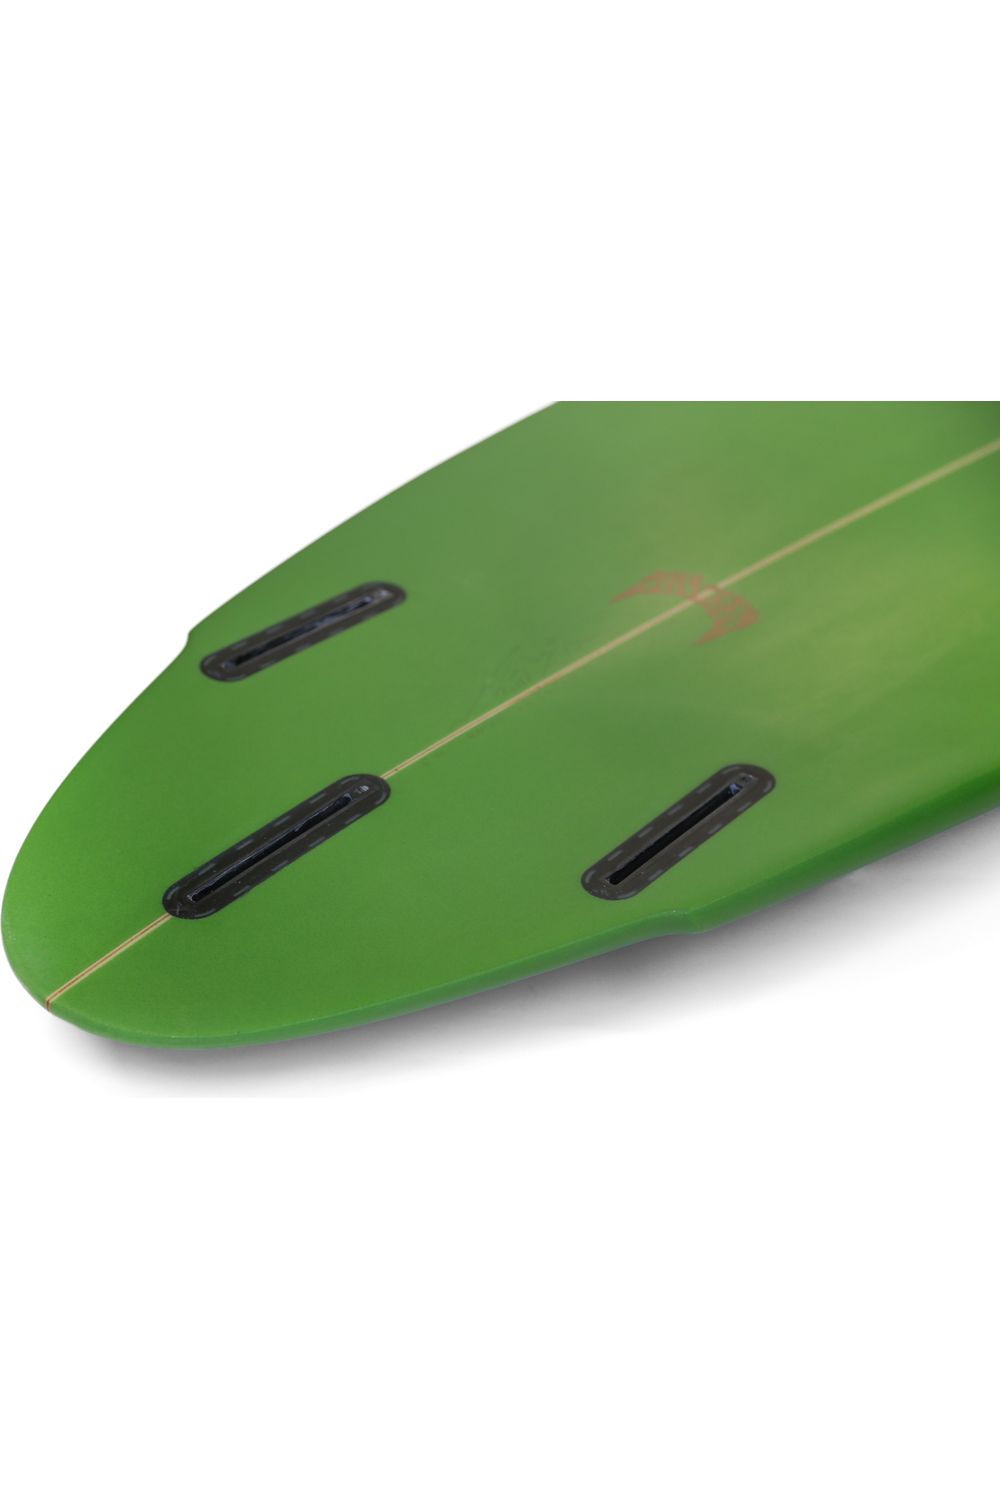 Lost Retro Tripper, 5'11 Surfboard 35.00L PU Futures 3 Fins